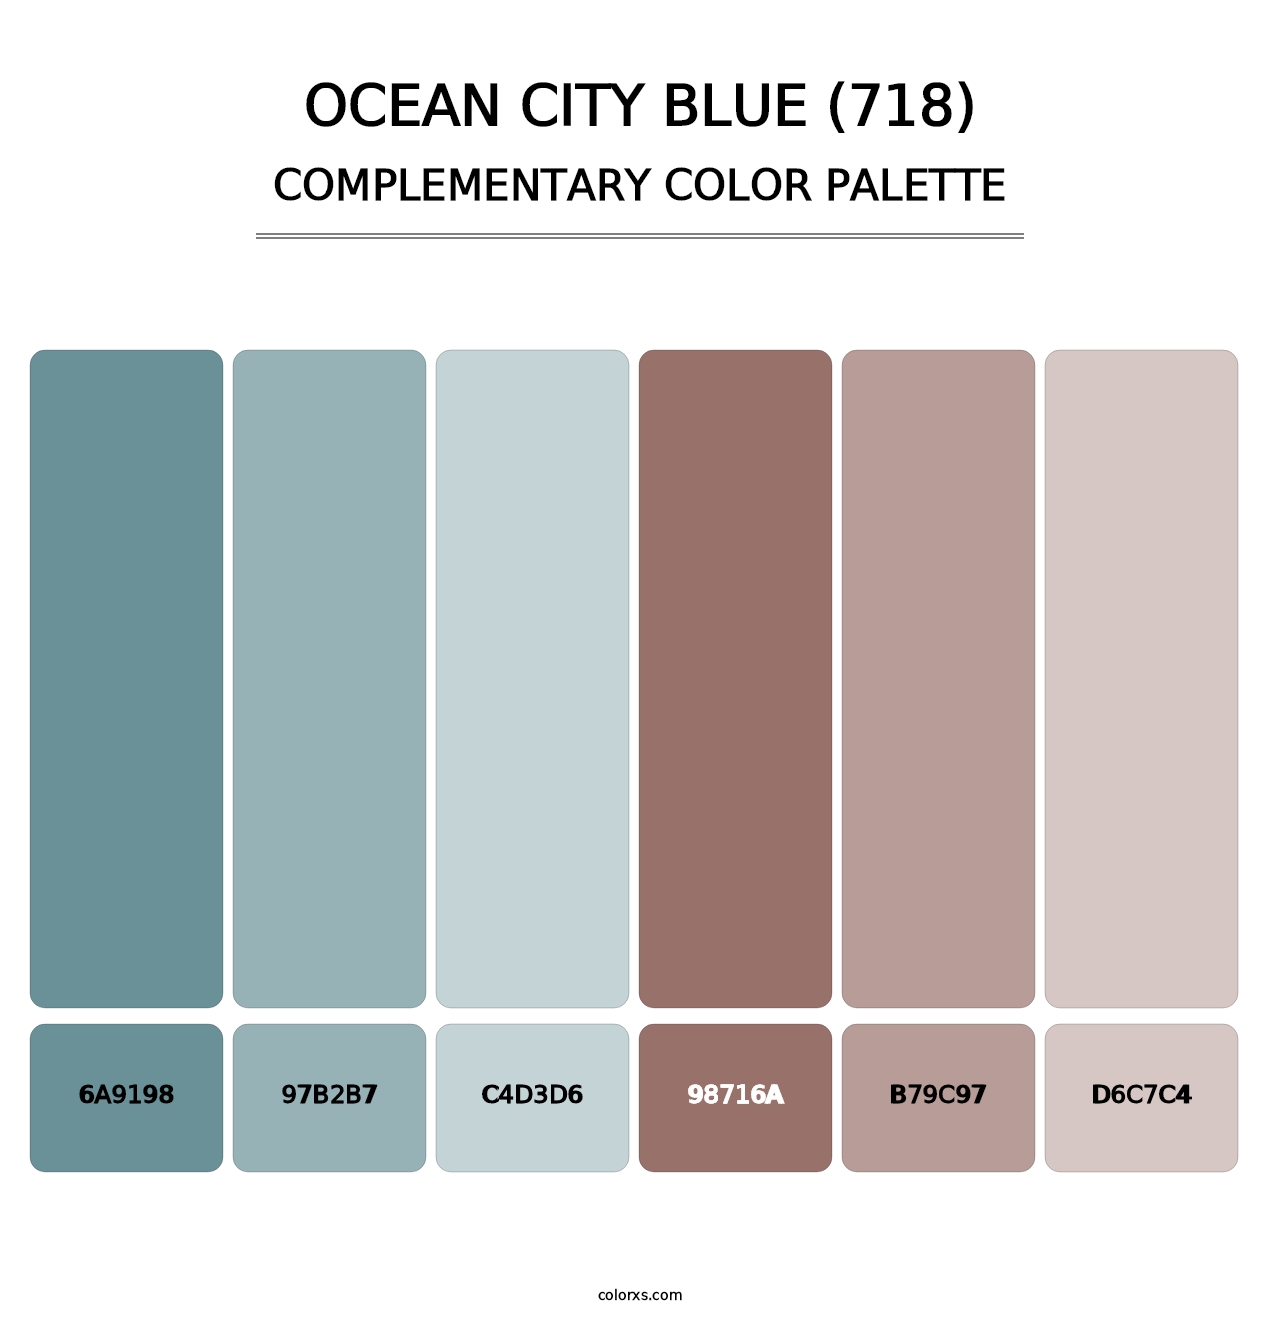 Ocean City Blue (718) - Complementary Color Palette